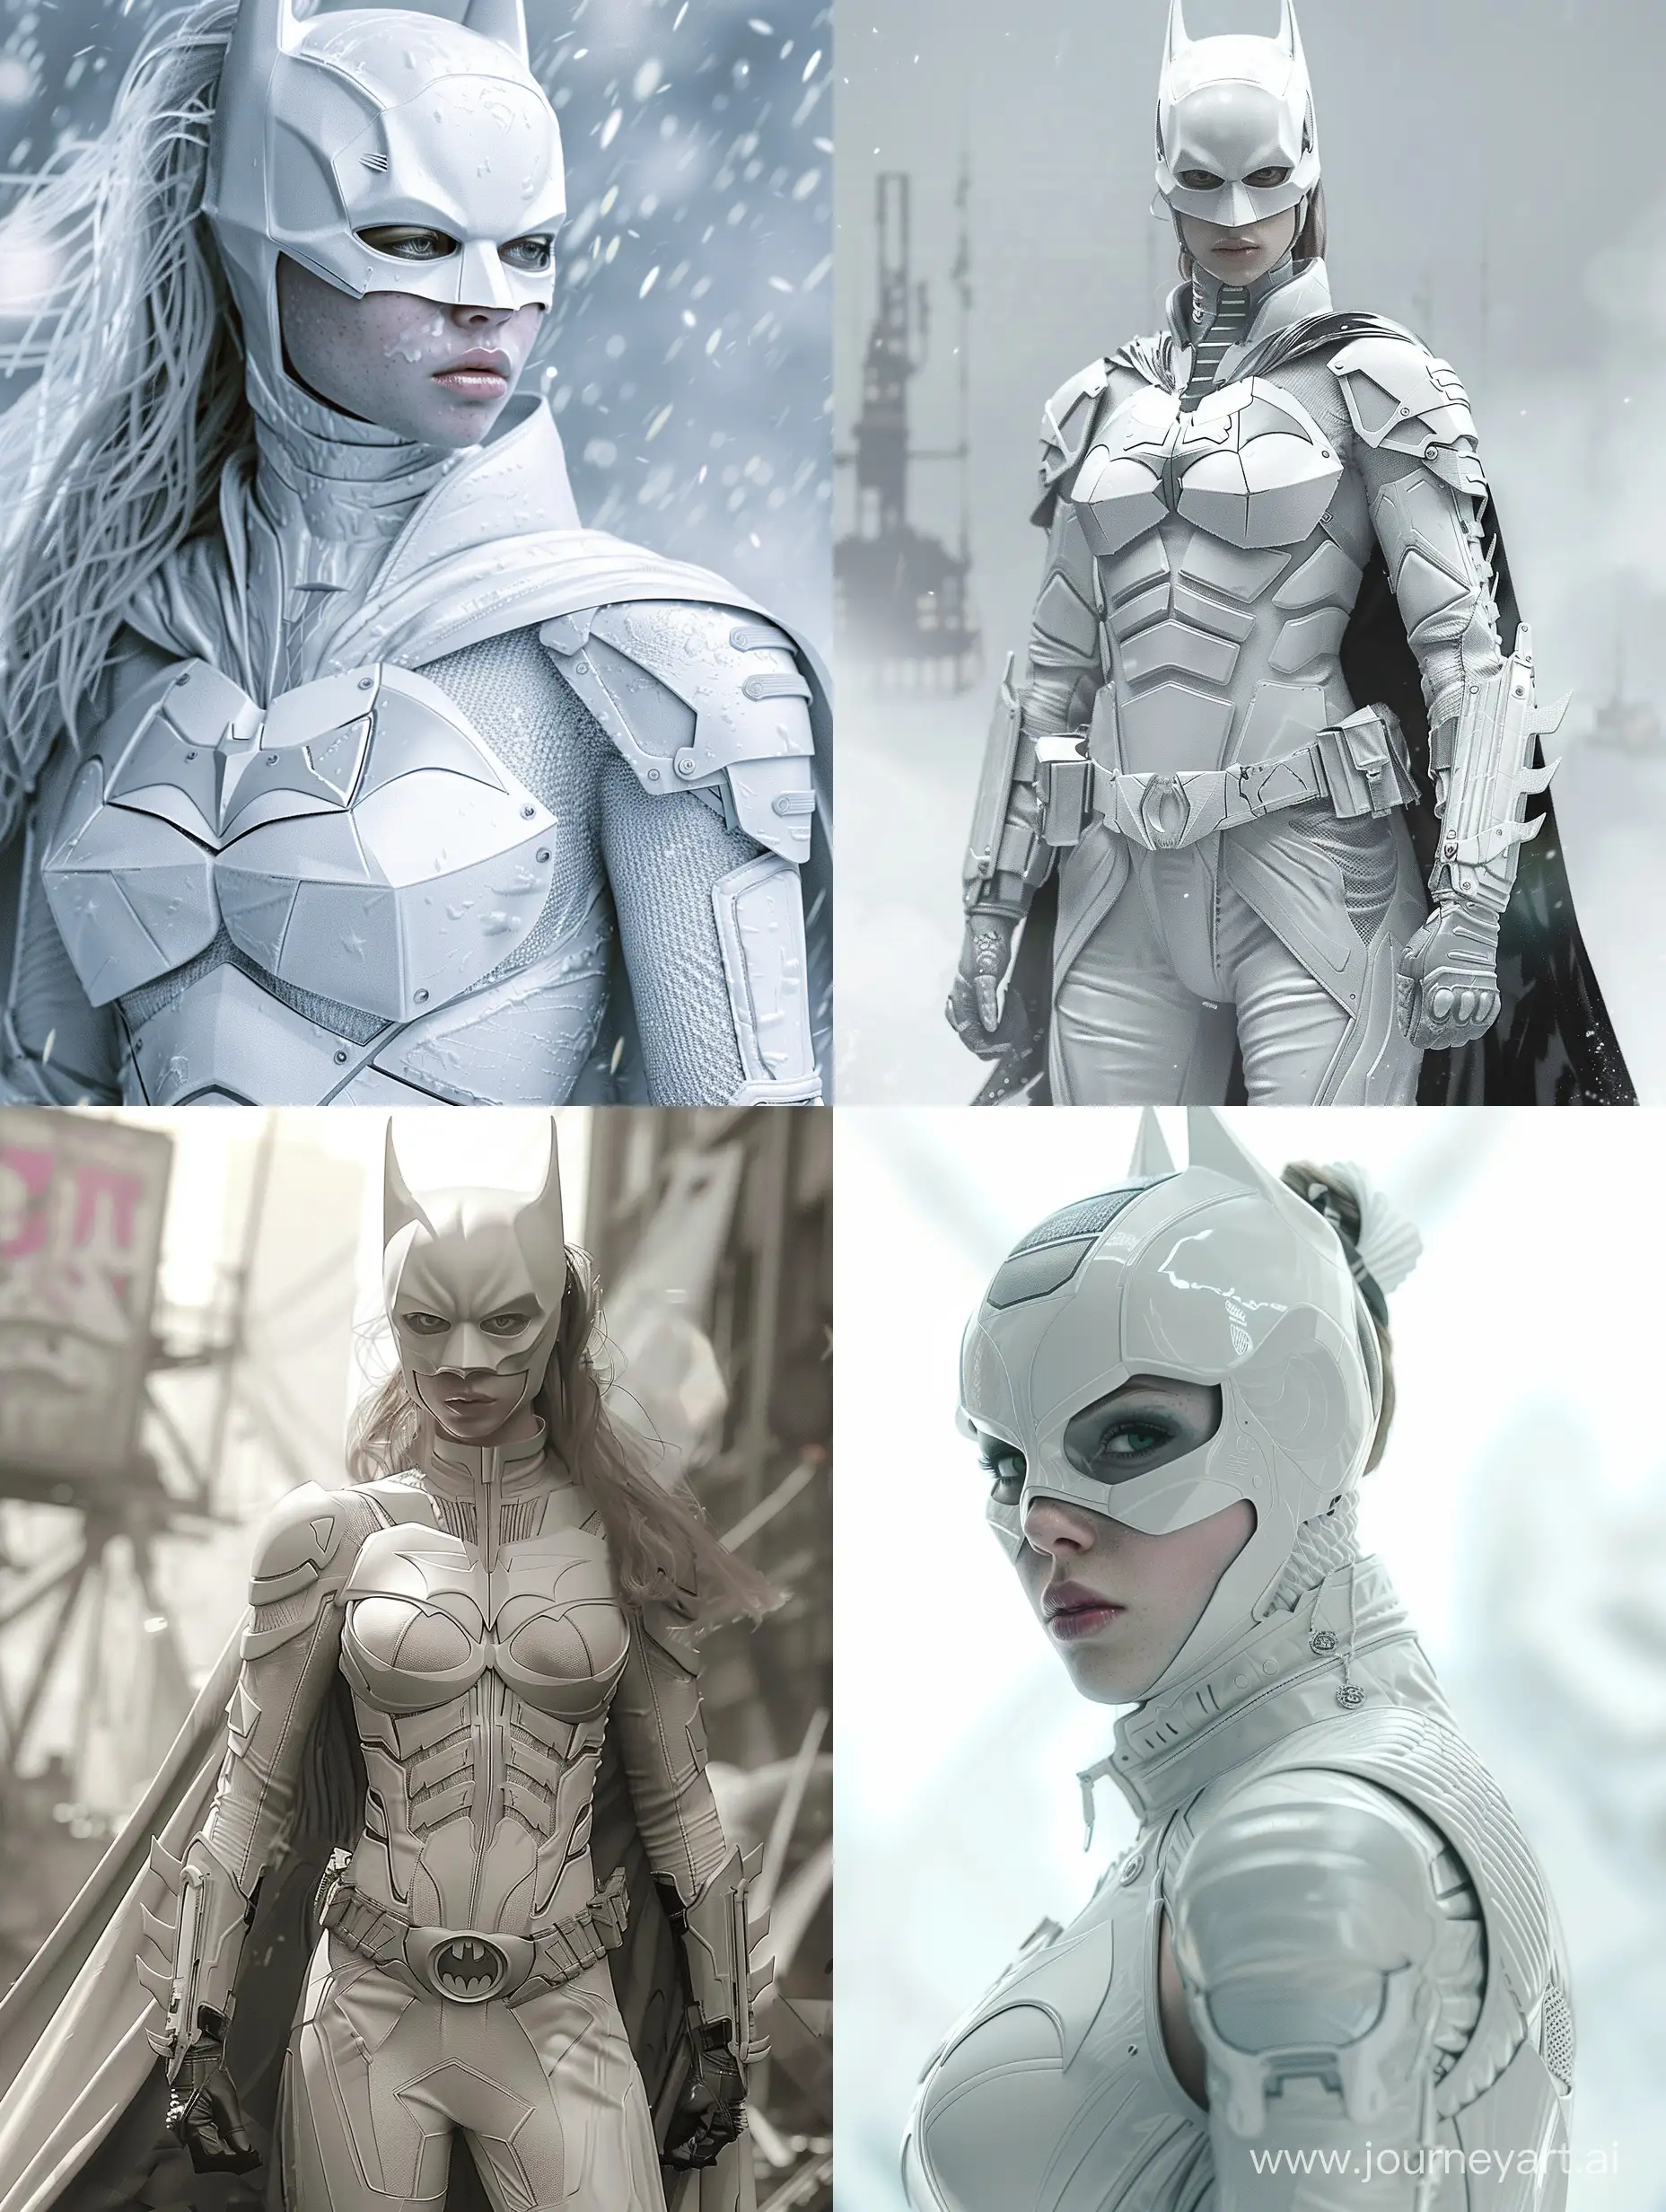 Hyperrealistic-Batgirl-Portrait-in-White-Costume